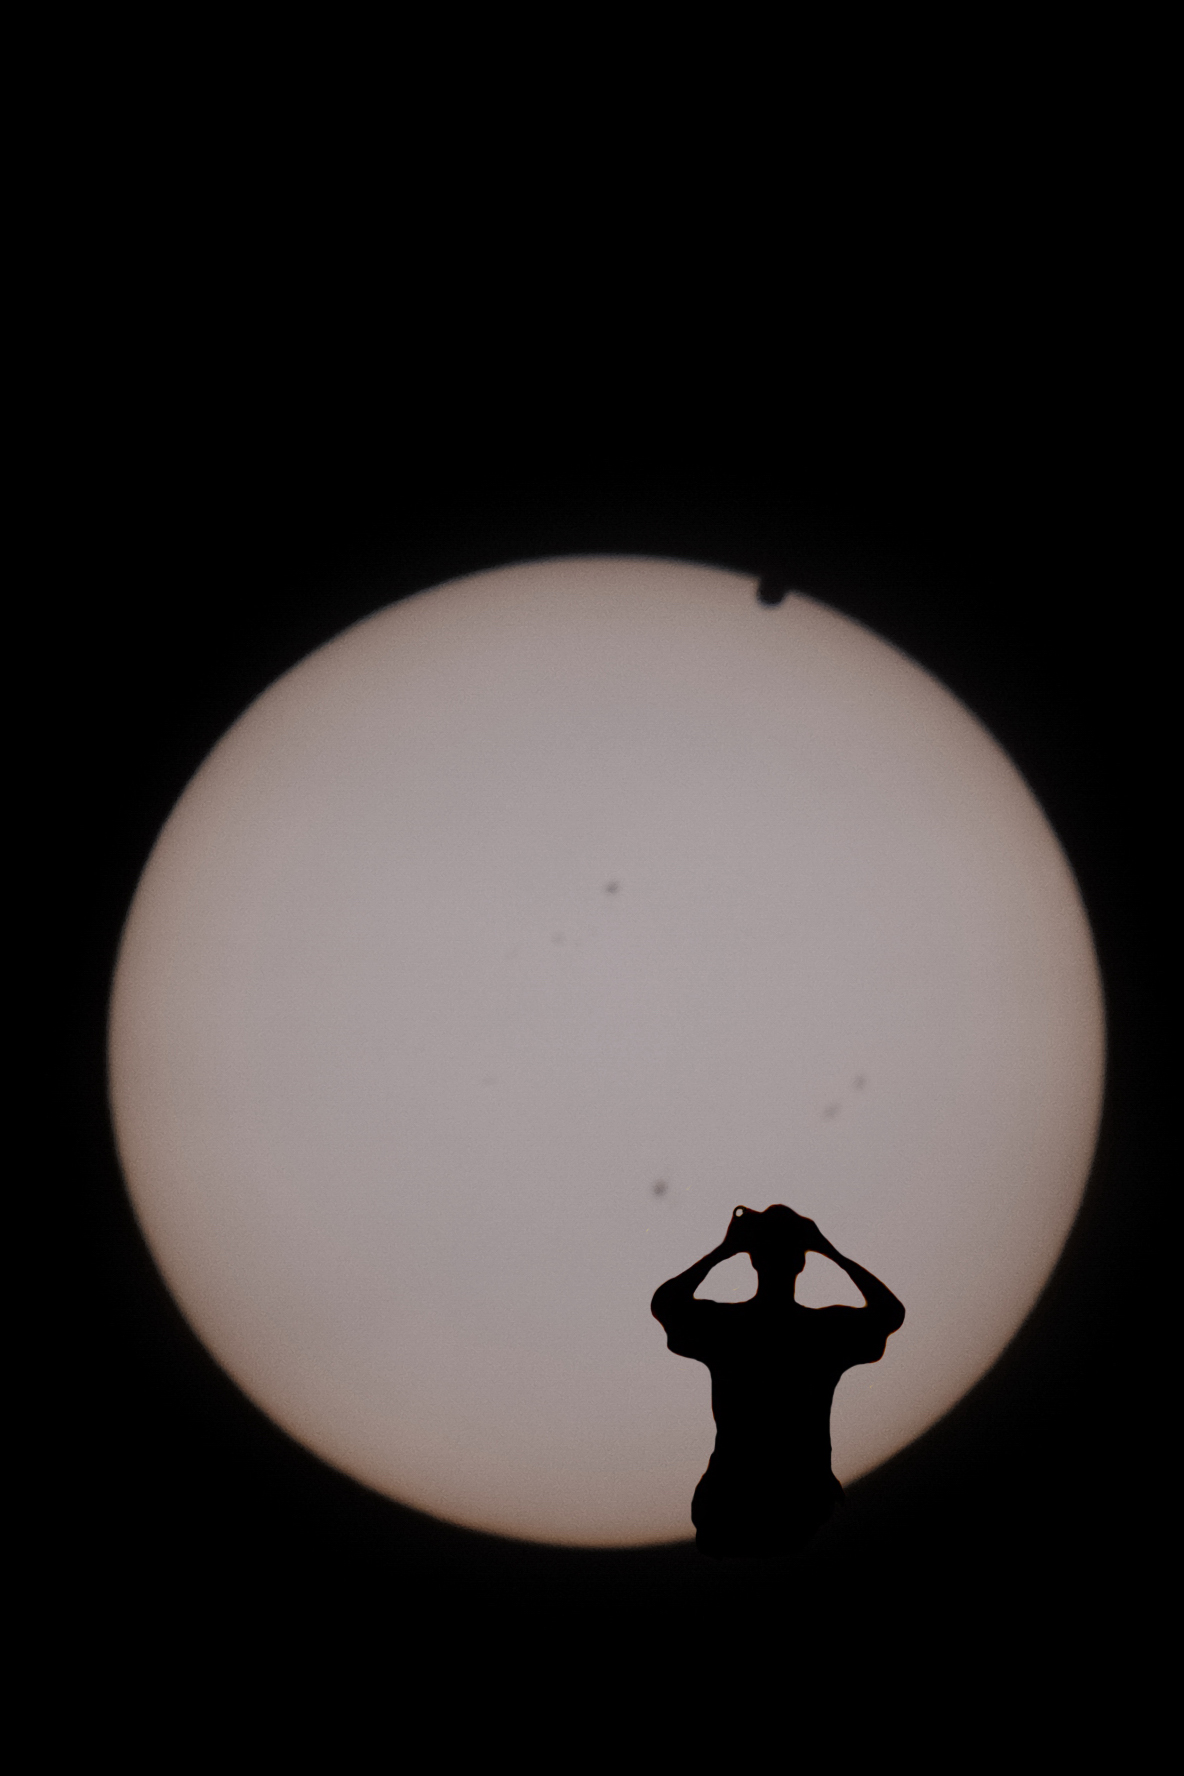 Transit of Venus in front of the Sun, June 6, 2012...